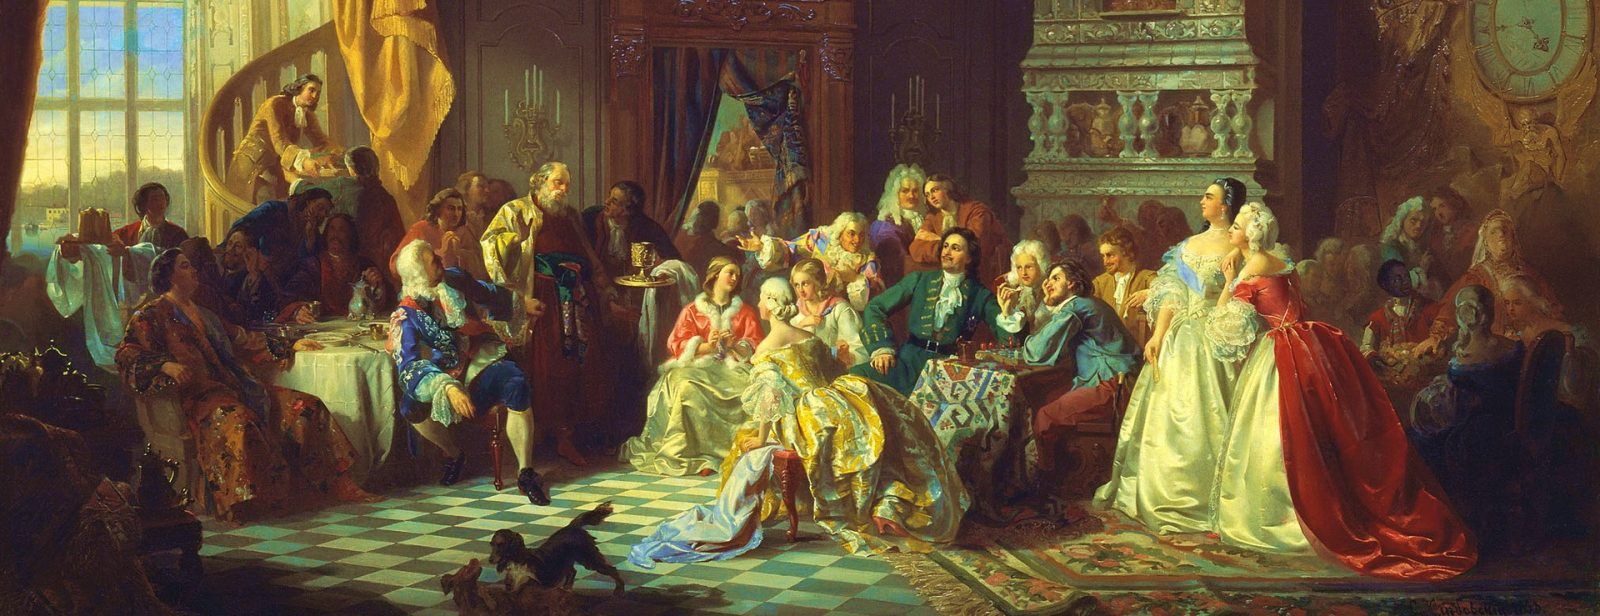 Станислав Хлебовский: Ассамблея при Петре I, фрагмент картины.